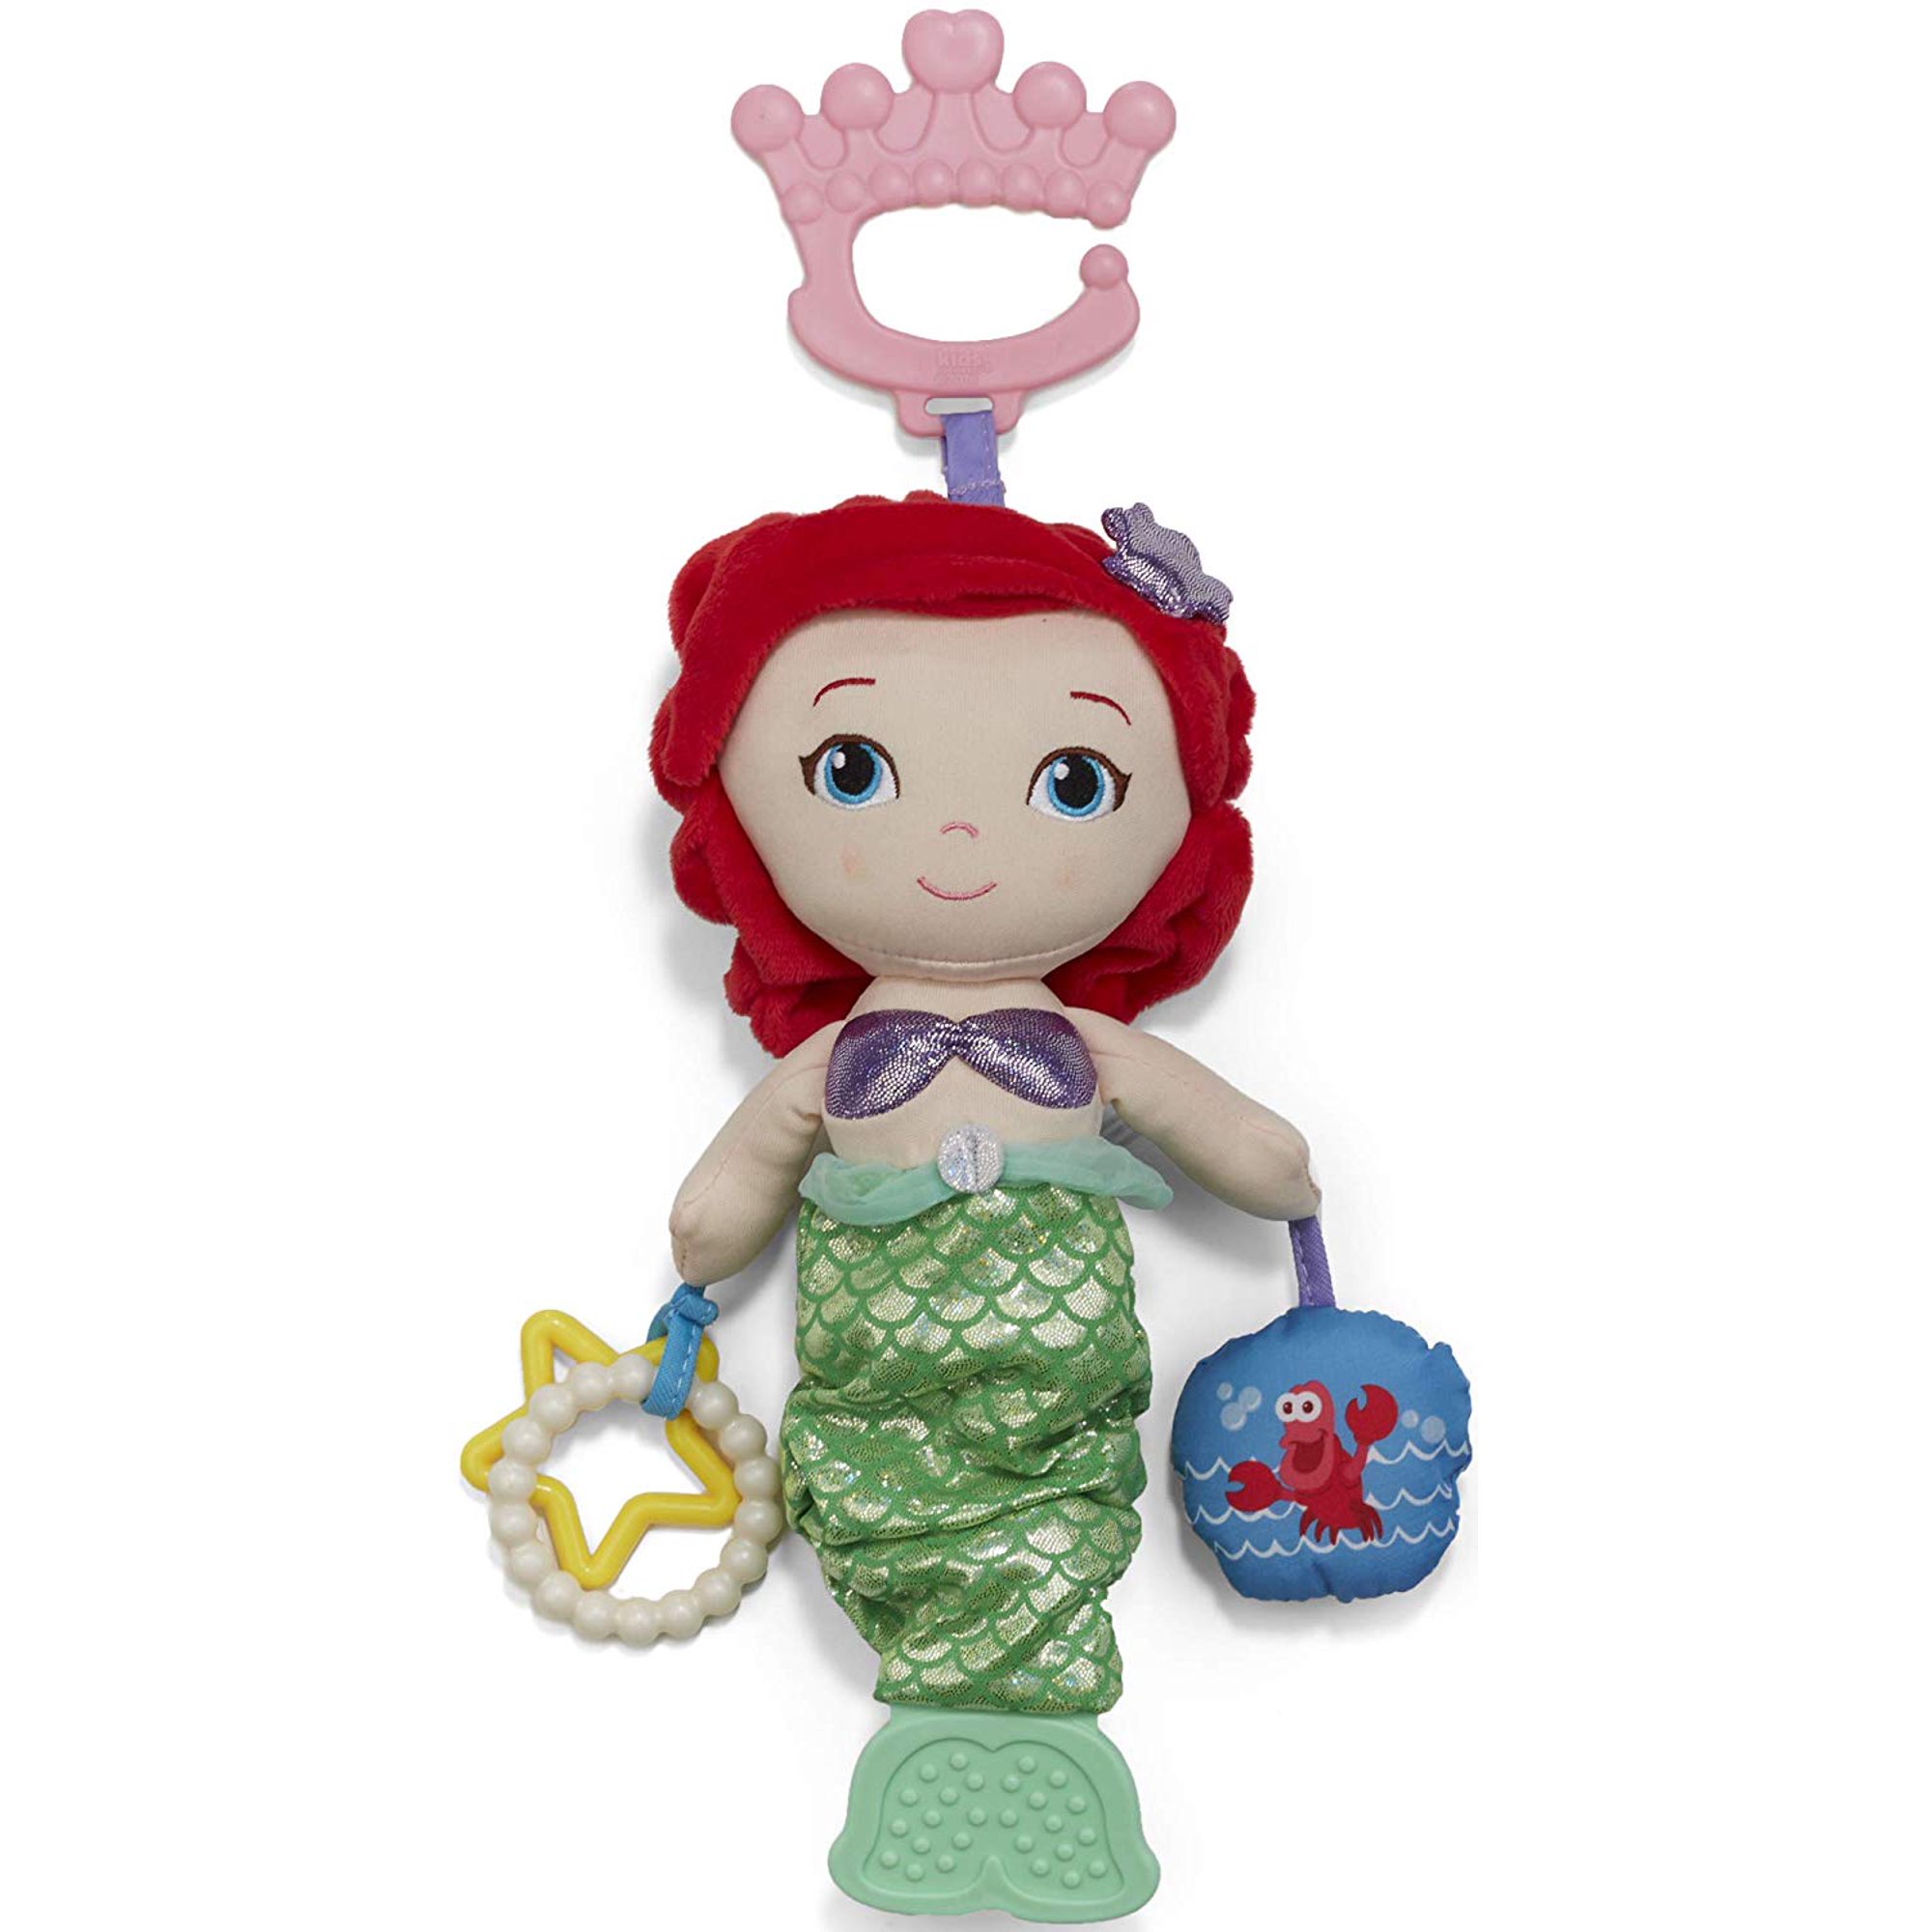 Disney Baby Princess Ariel On The Go Activity Plush Toy $5 + FS w/ Walmart+ or FS on $35+